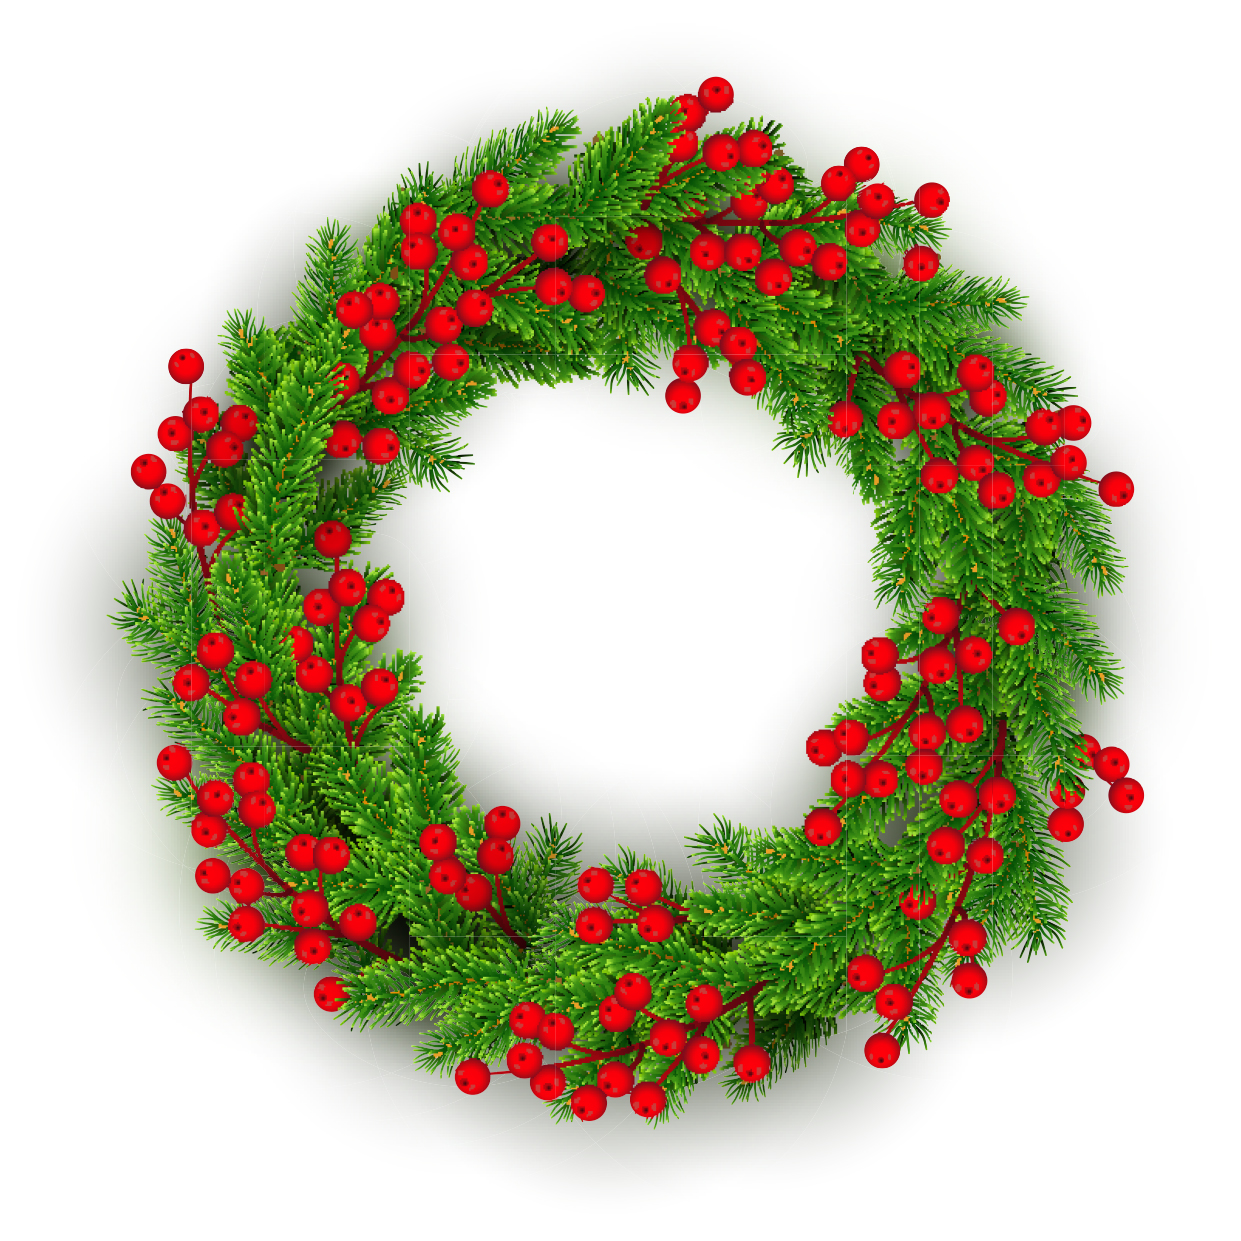 Winter Wreath - sent on December 26th, 2020